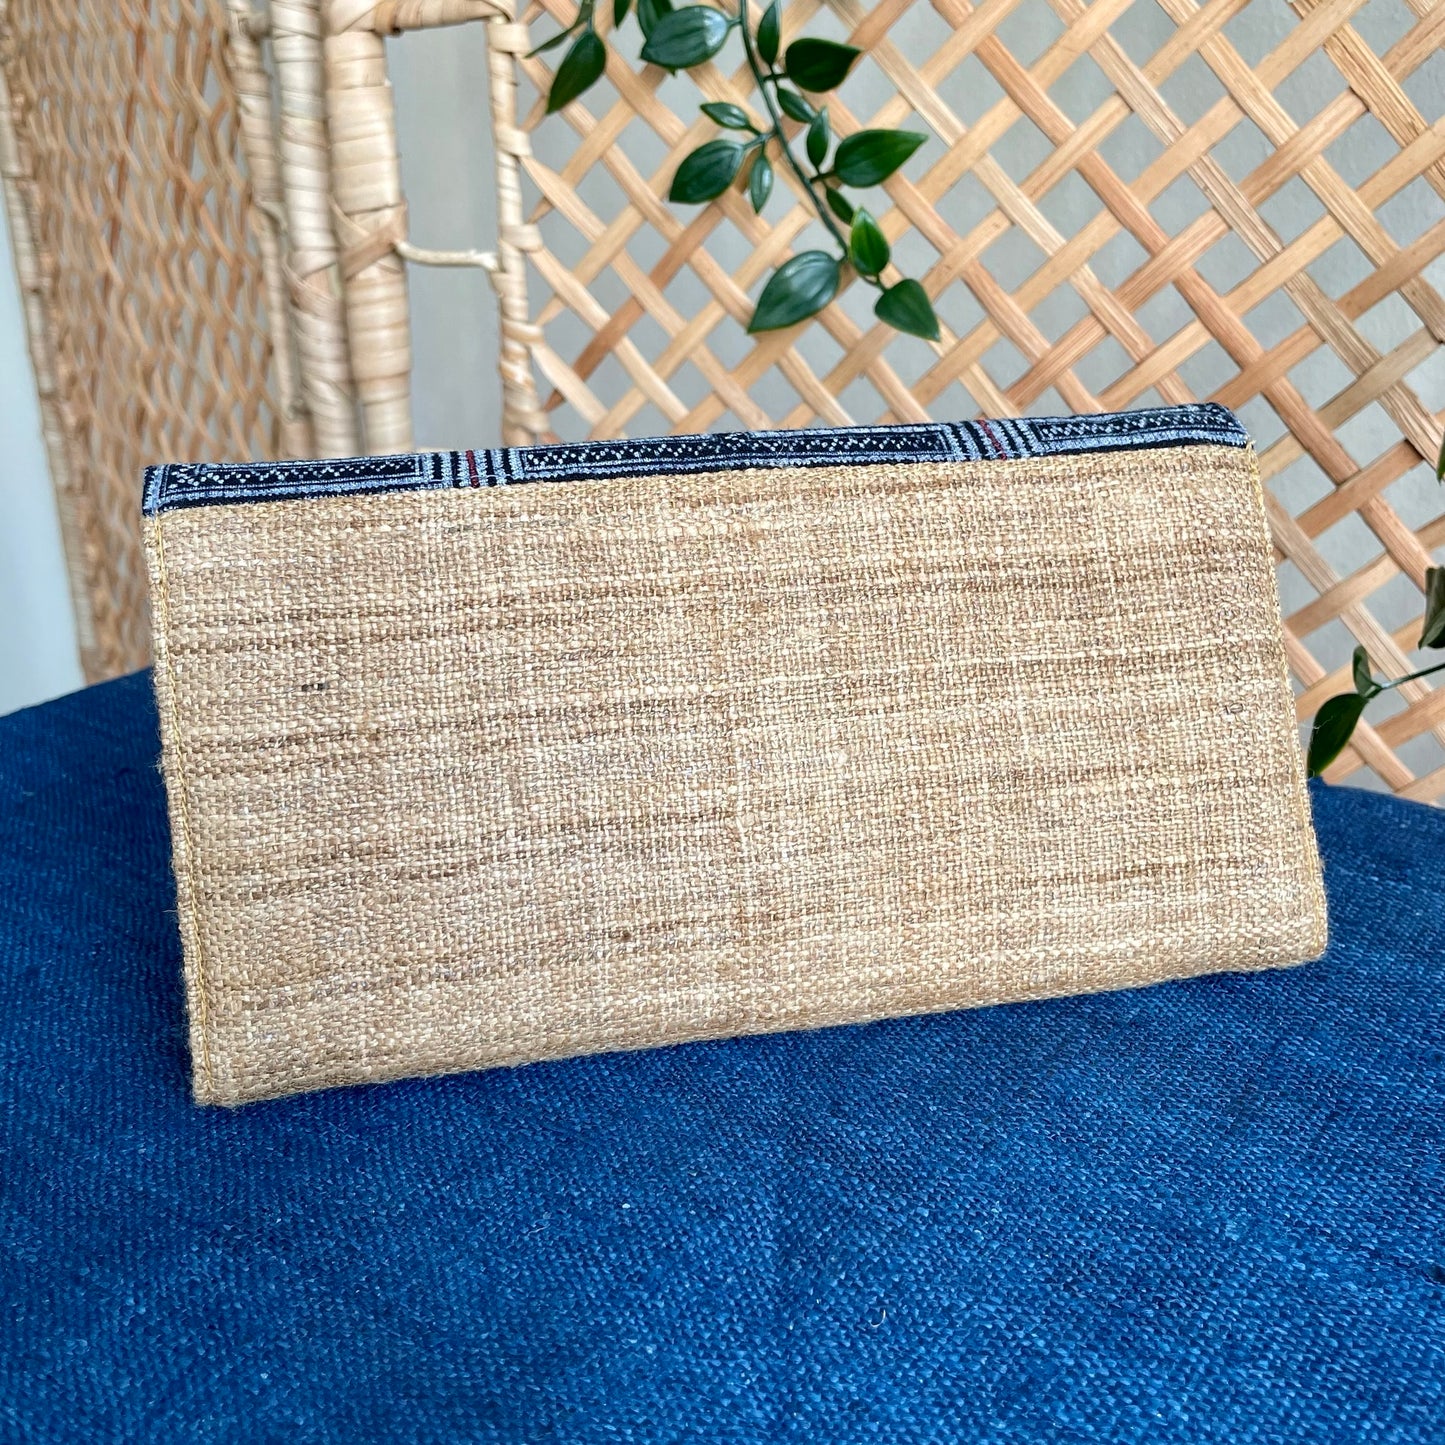 Brown long purse, Hemp fabric, Indigo Batik fabric, H'mong pattern